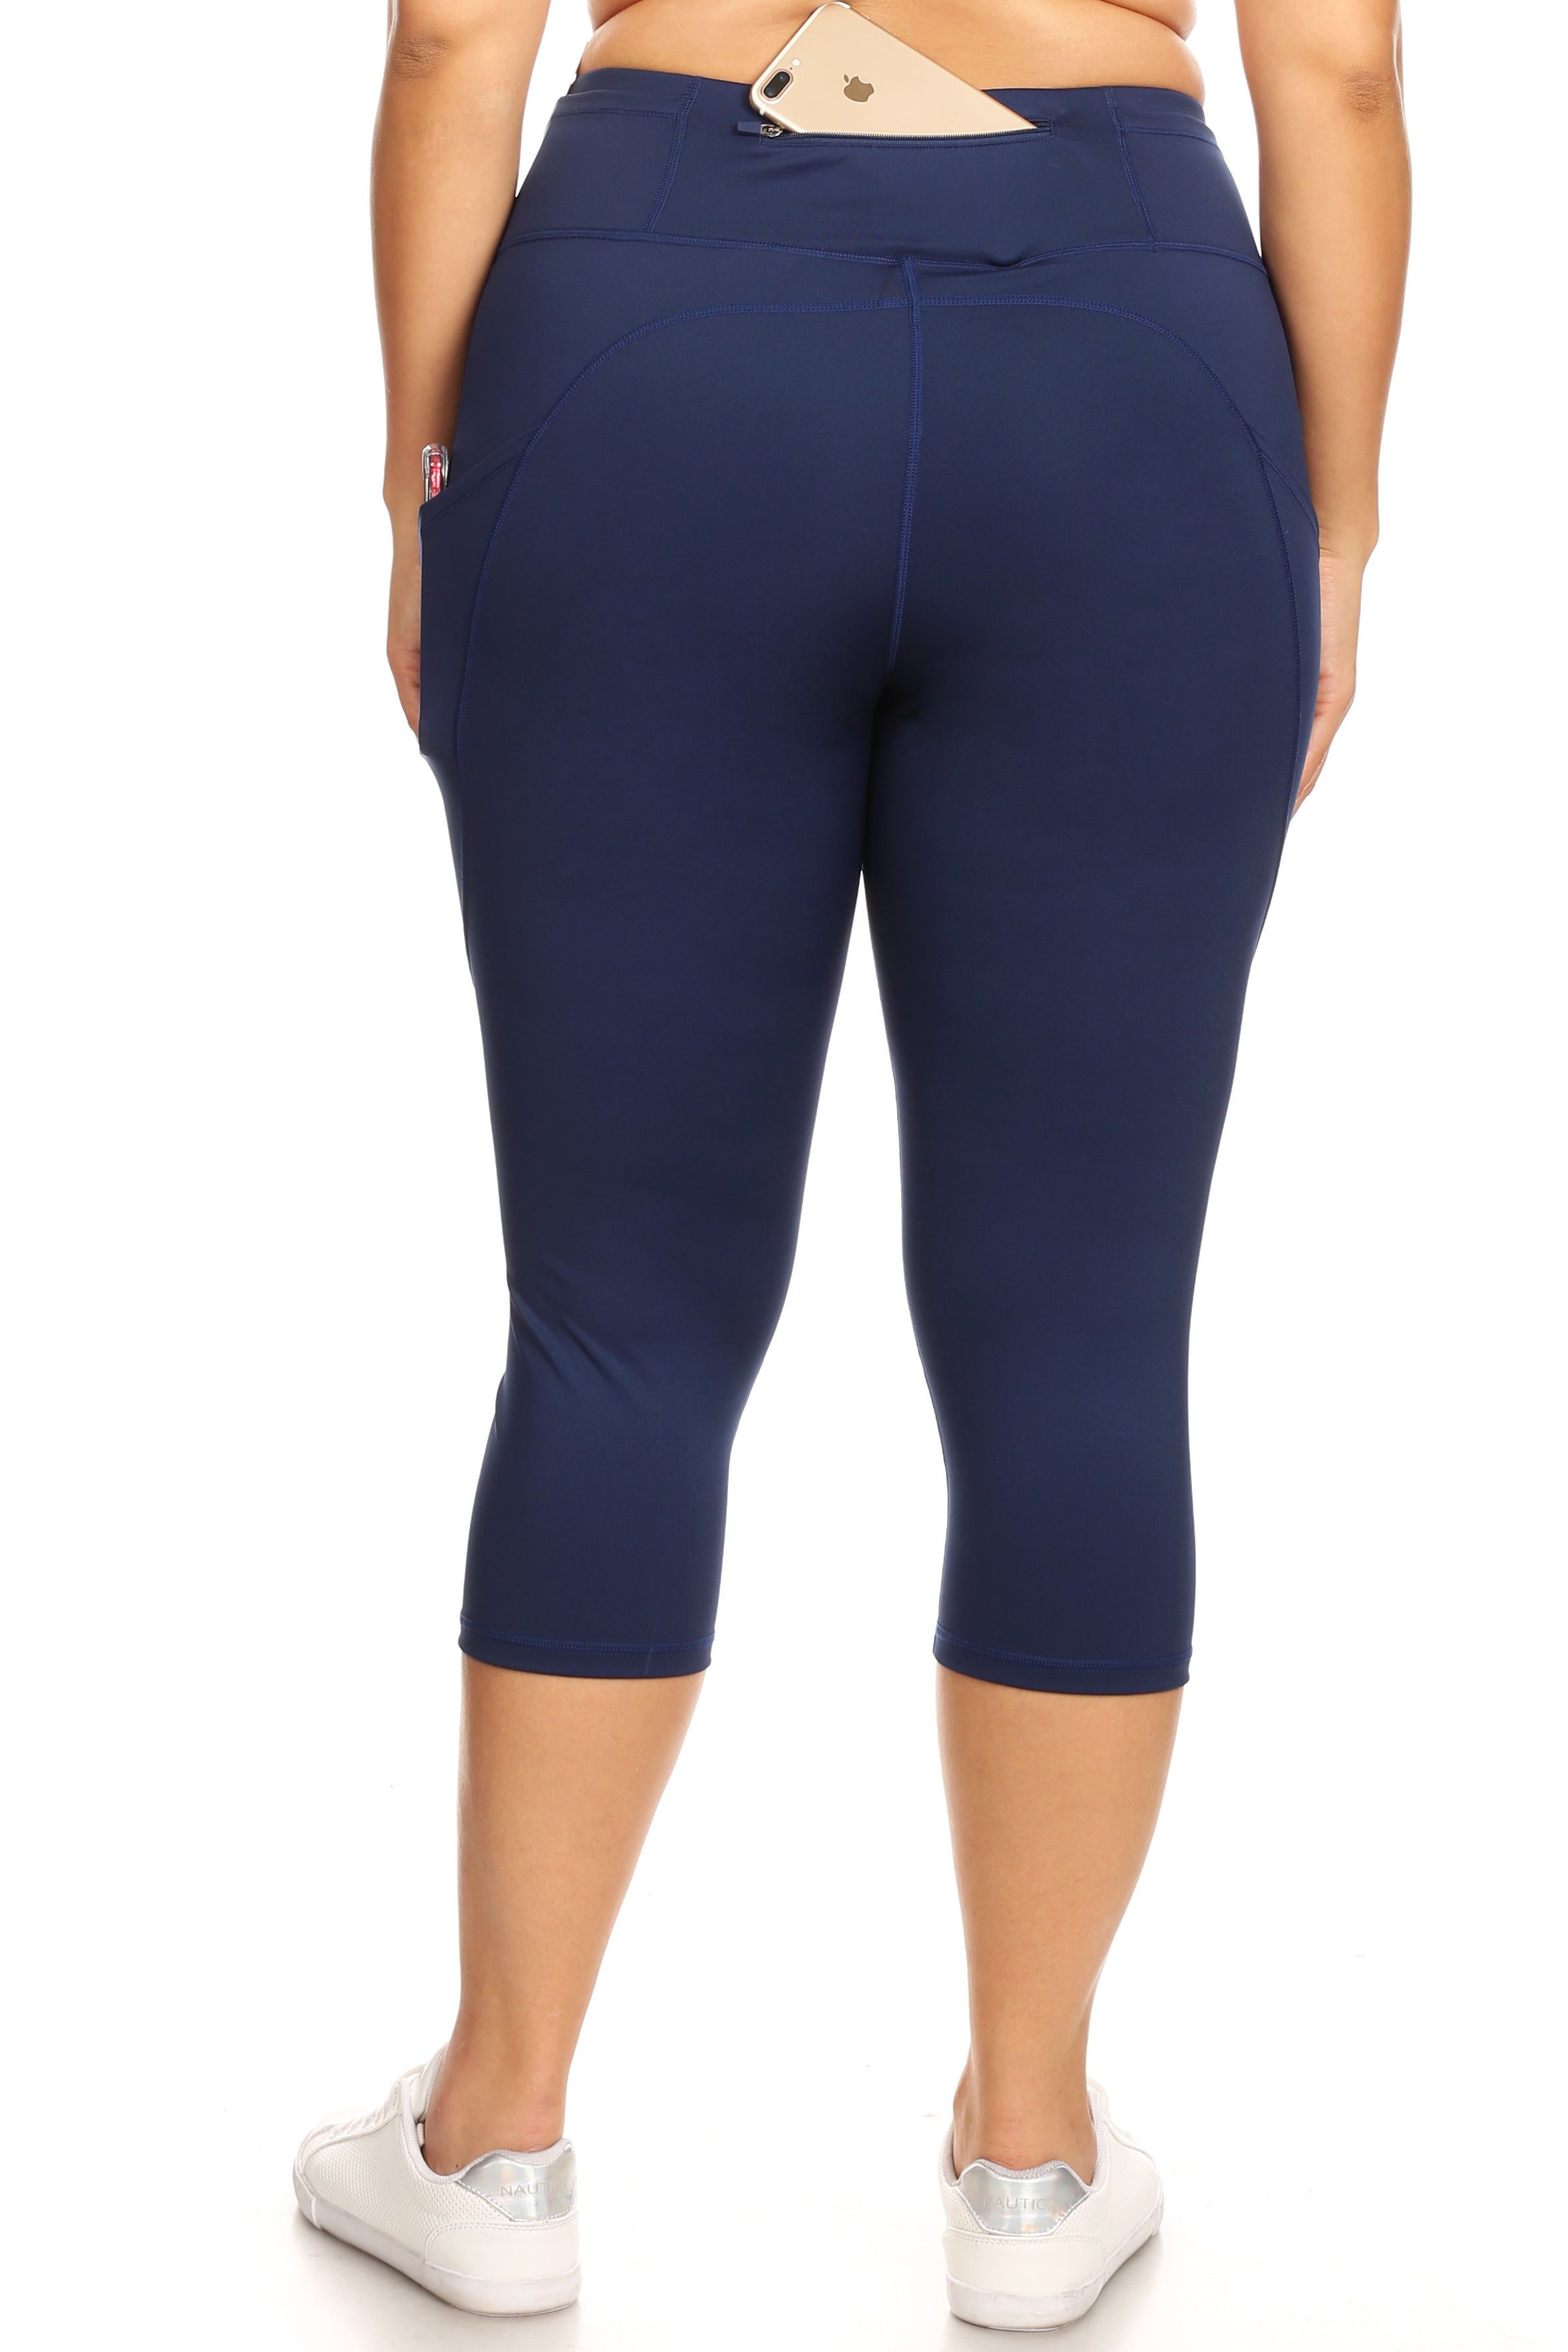 Olivia Mark – Womens Plus Size Sports Capri Pants: Colorblock Contrast Mesh  High Stretch Leggings with Convenient Phone Pockets – Olivia Mark